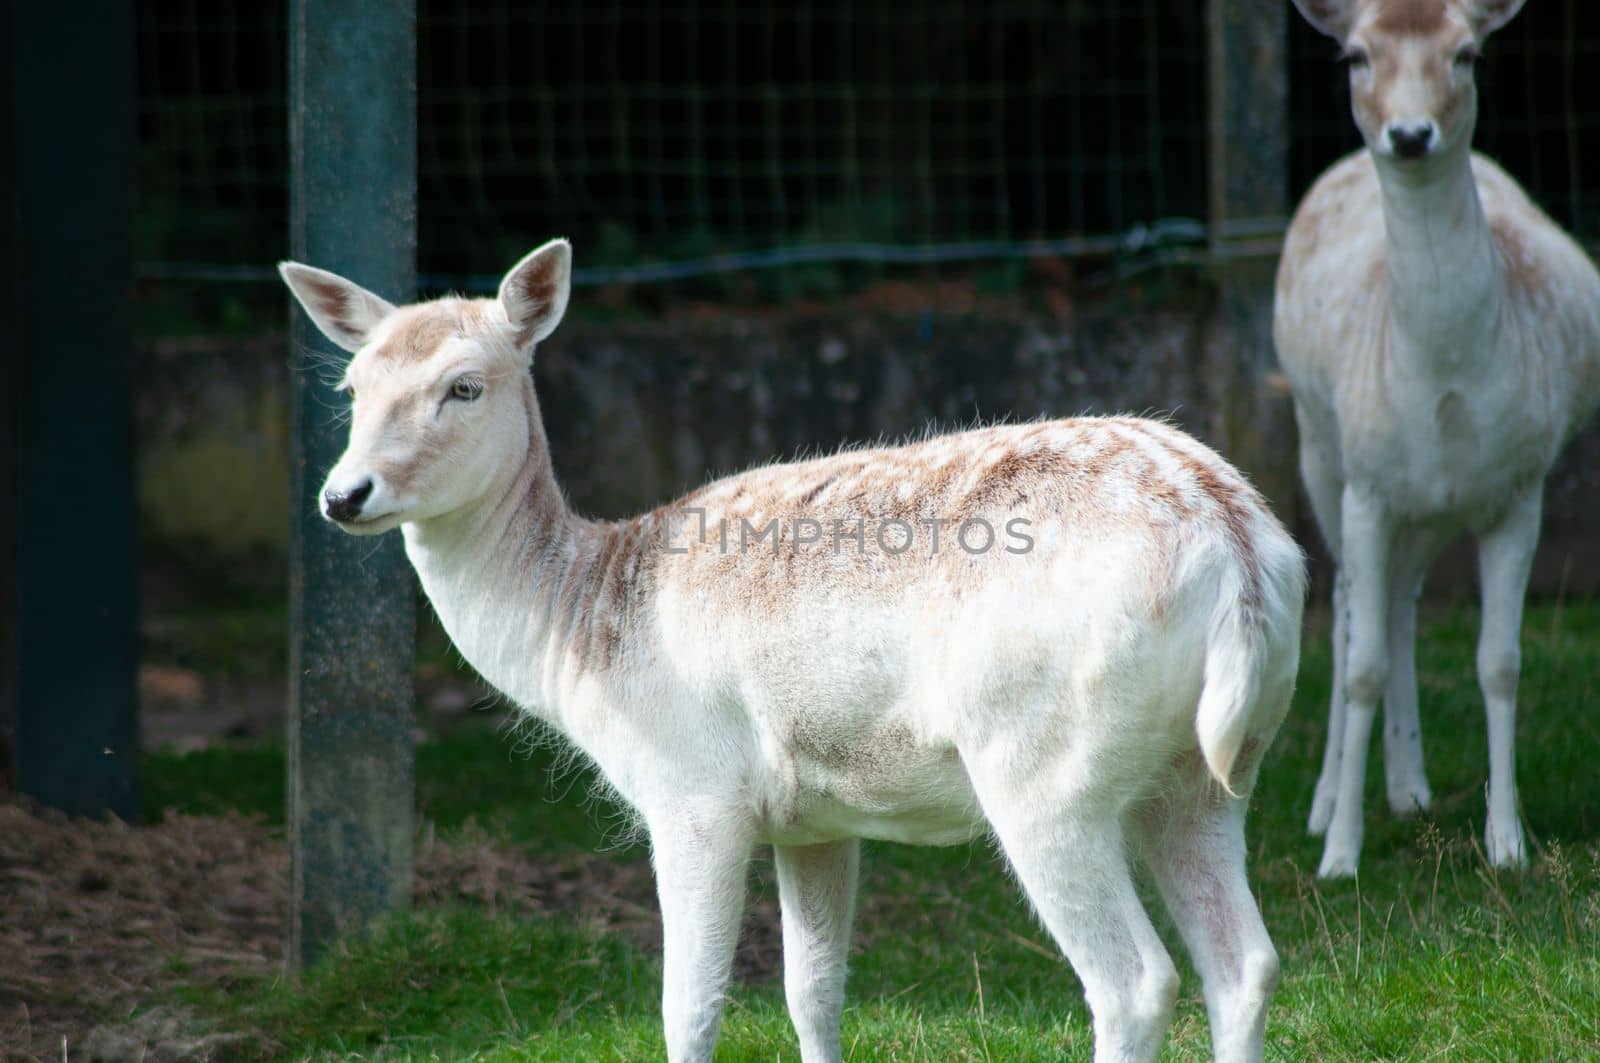 beautiful little beige deer in the zoo, small cattle farm by KaterinaDalemans